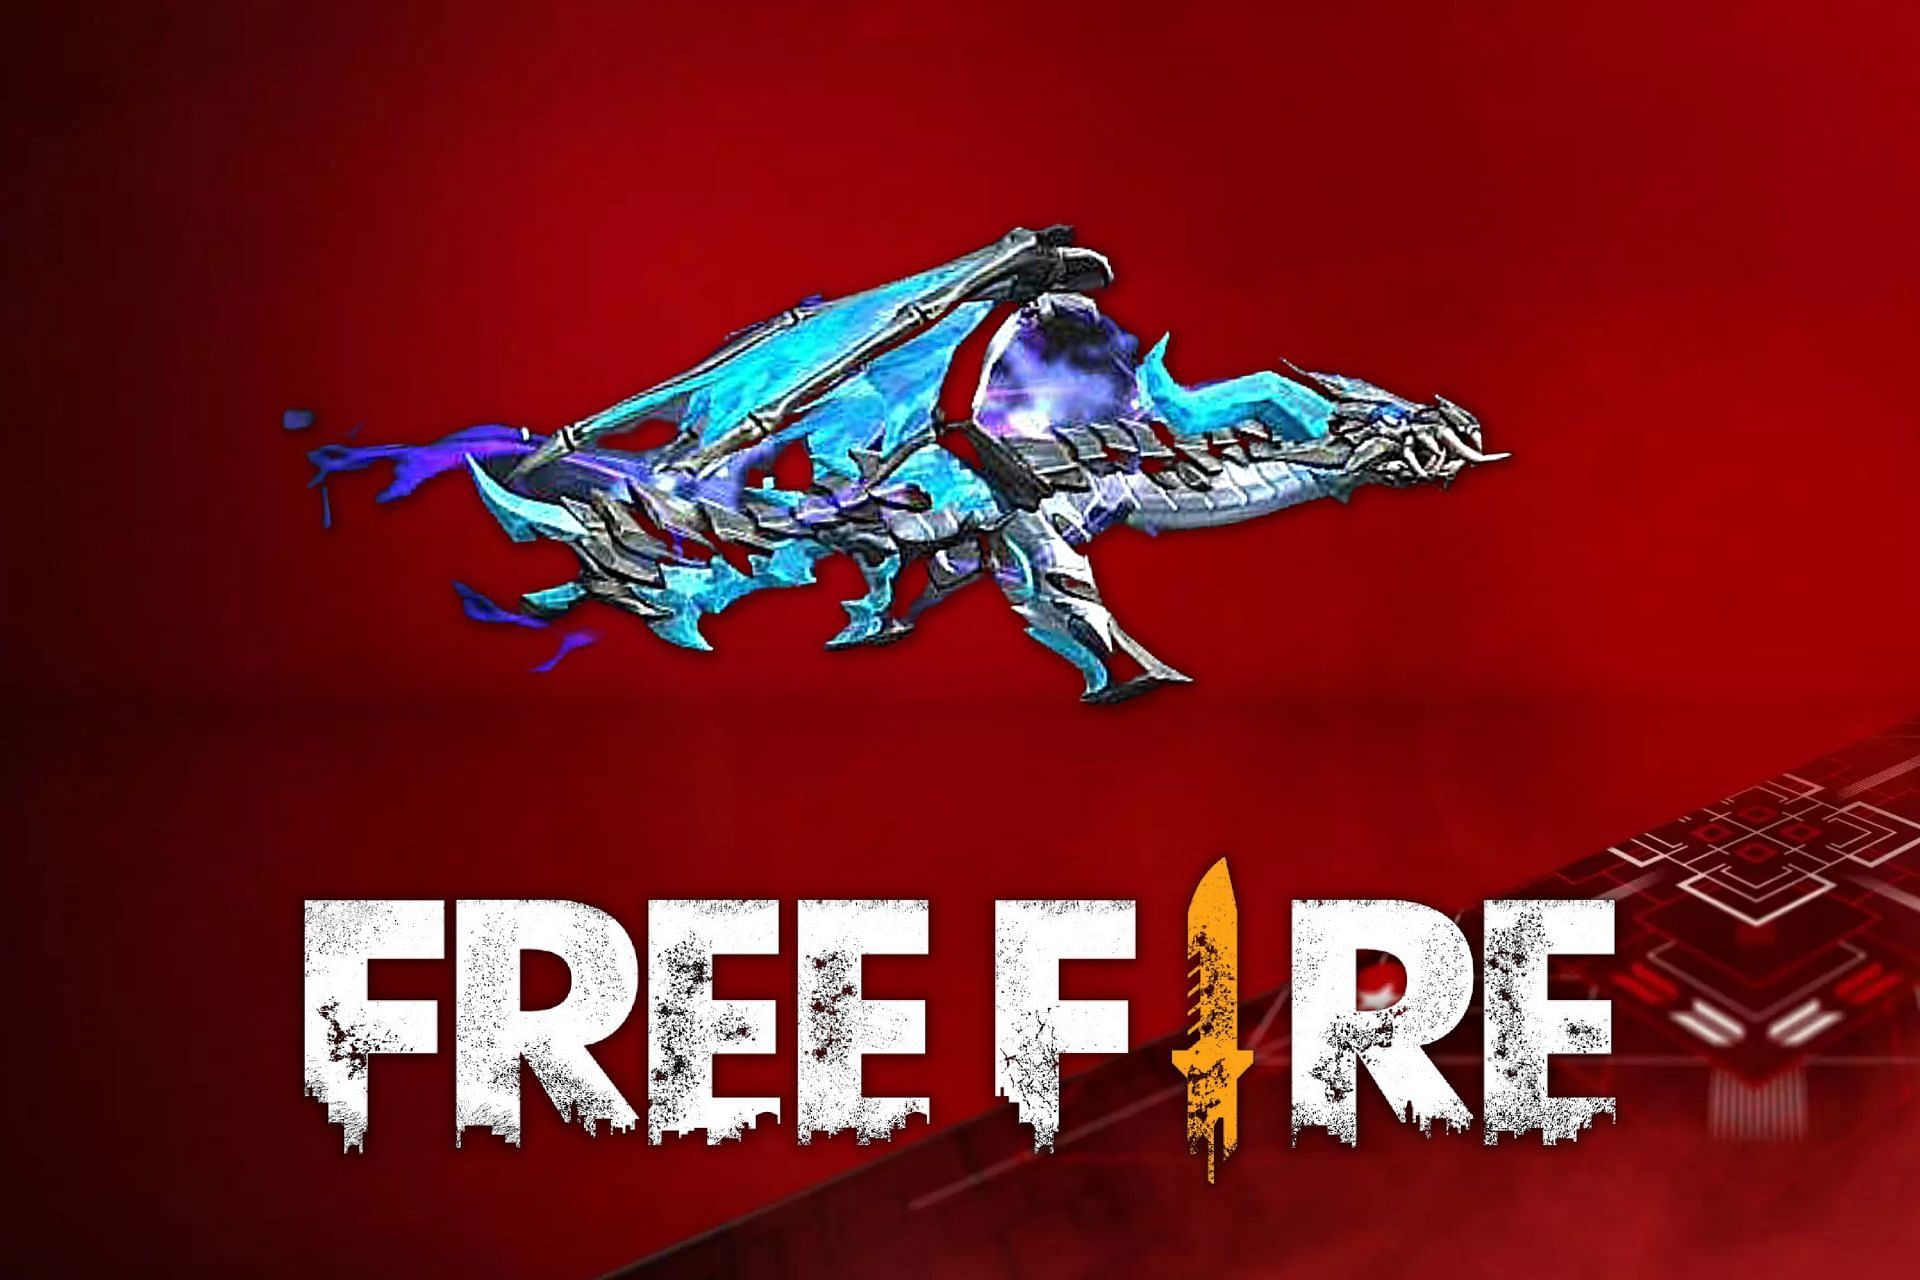 The Blue Flame Draco AK skin is back in Free Fire (Image via Sportskeeda)